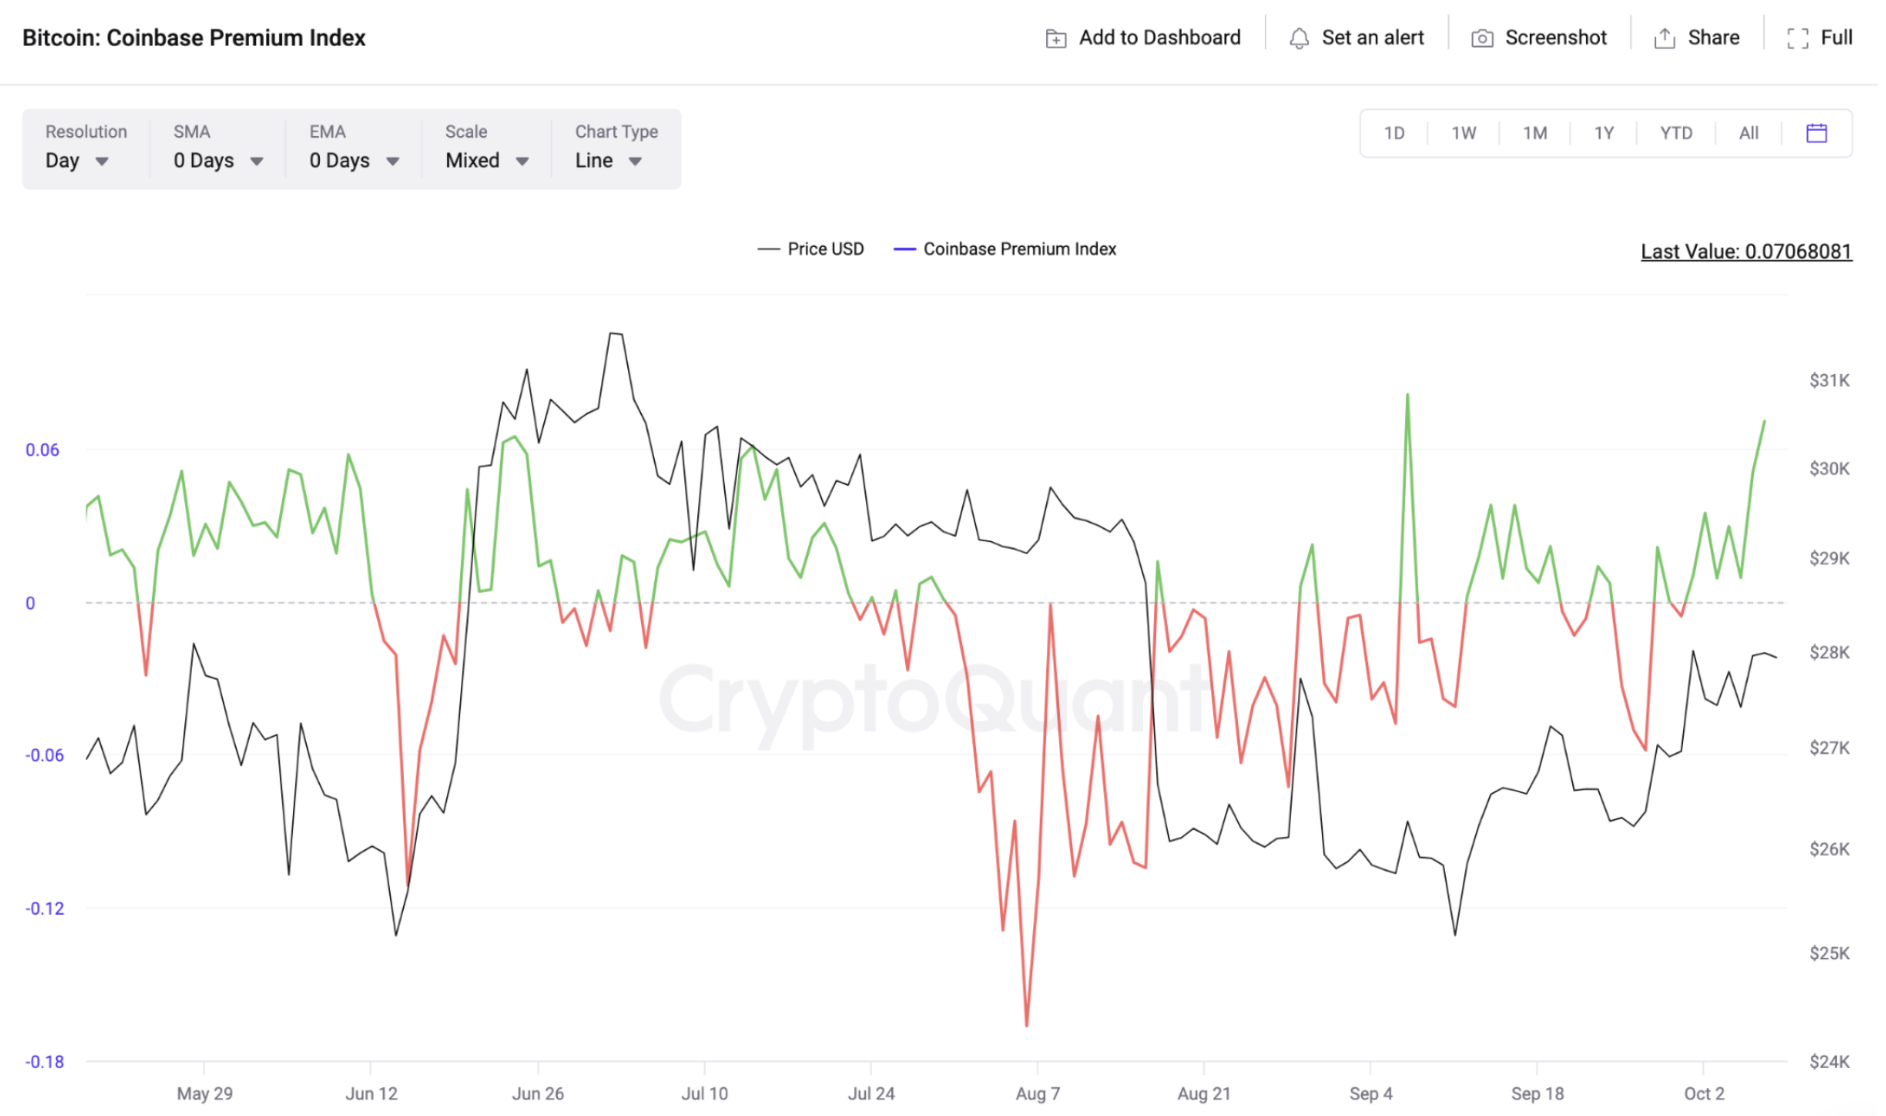 Bitcoin (BTC) Coinbase Premium Index vs. Price 